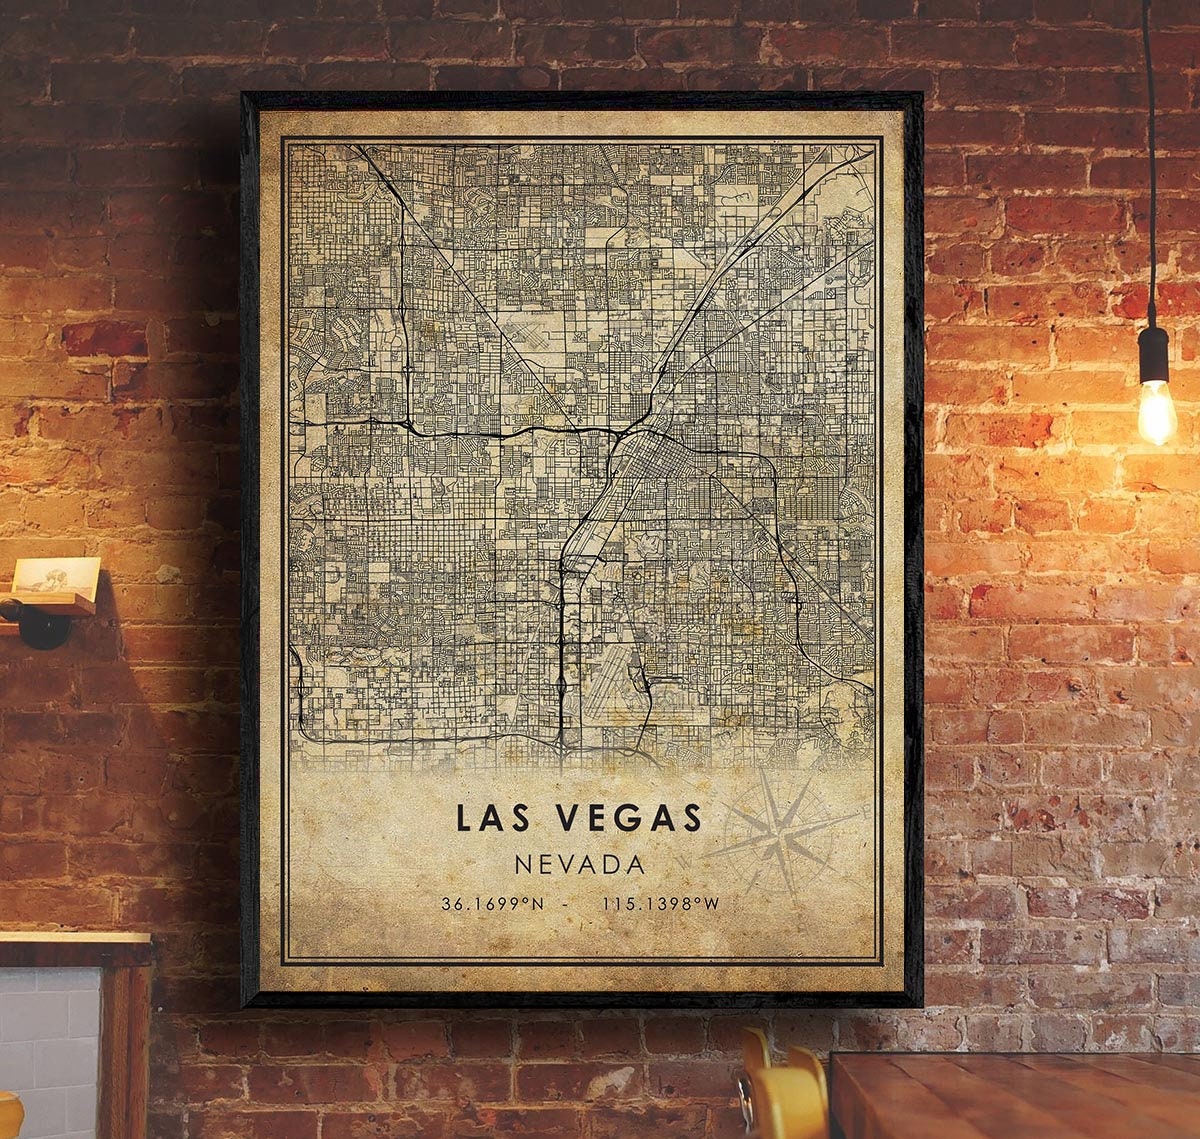 Historic Pictoric Map : Las Vegas (Nevada),Las Vegas, Nevada. Las Vegas Fun  Map, 1960, Antique Vintage Reproduction : 44in x 60in